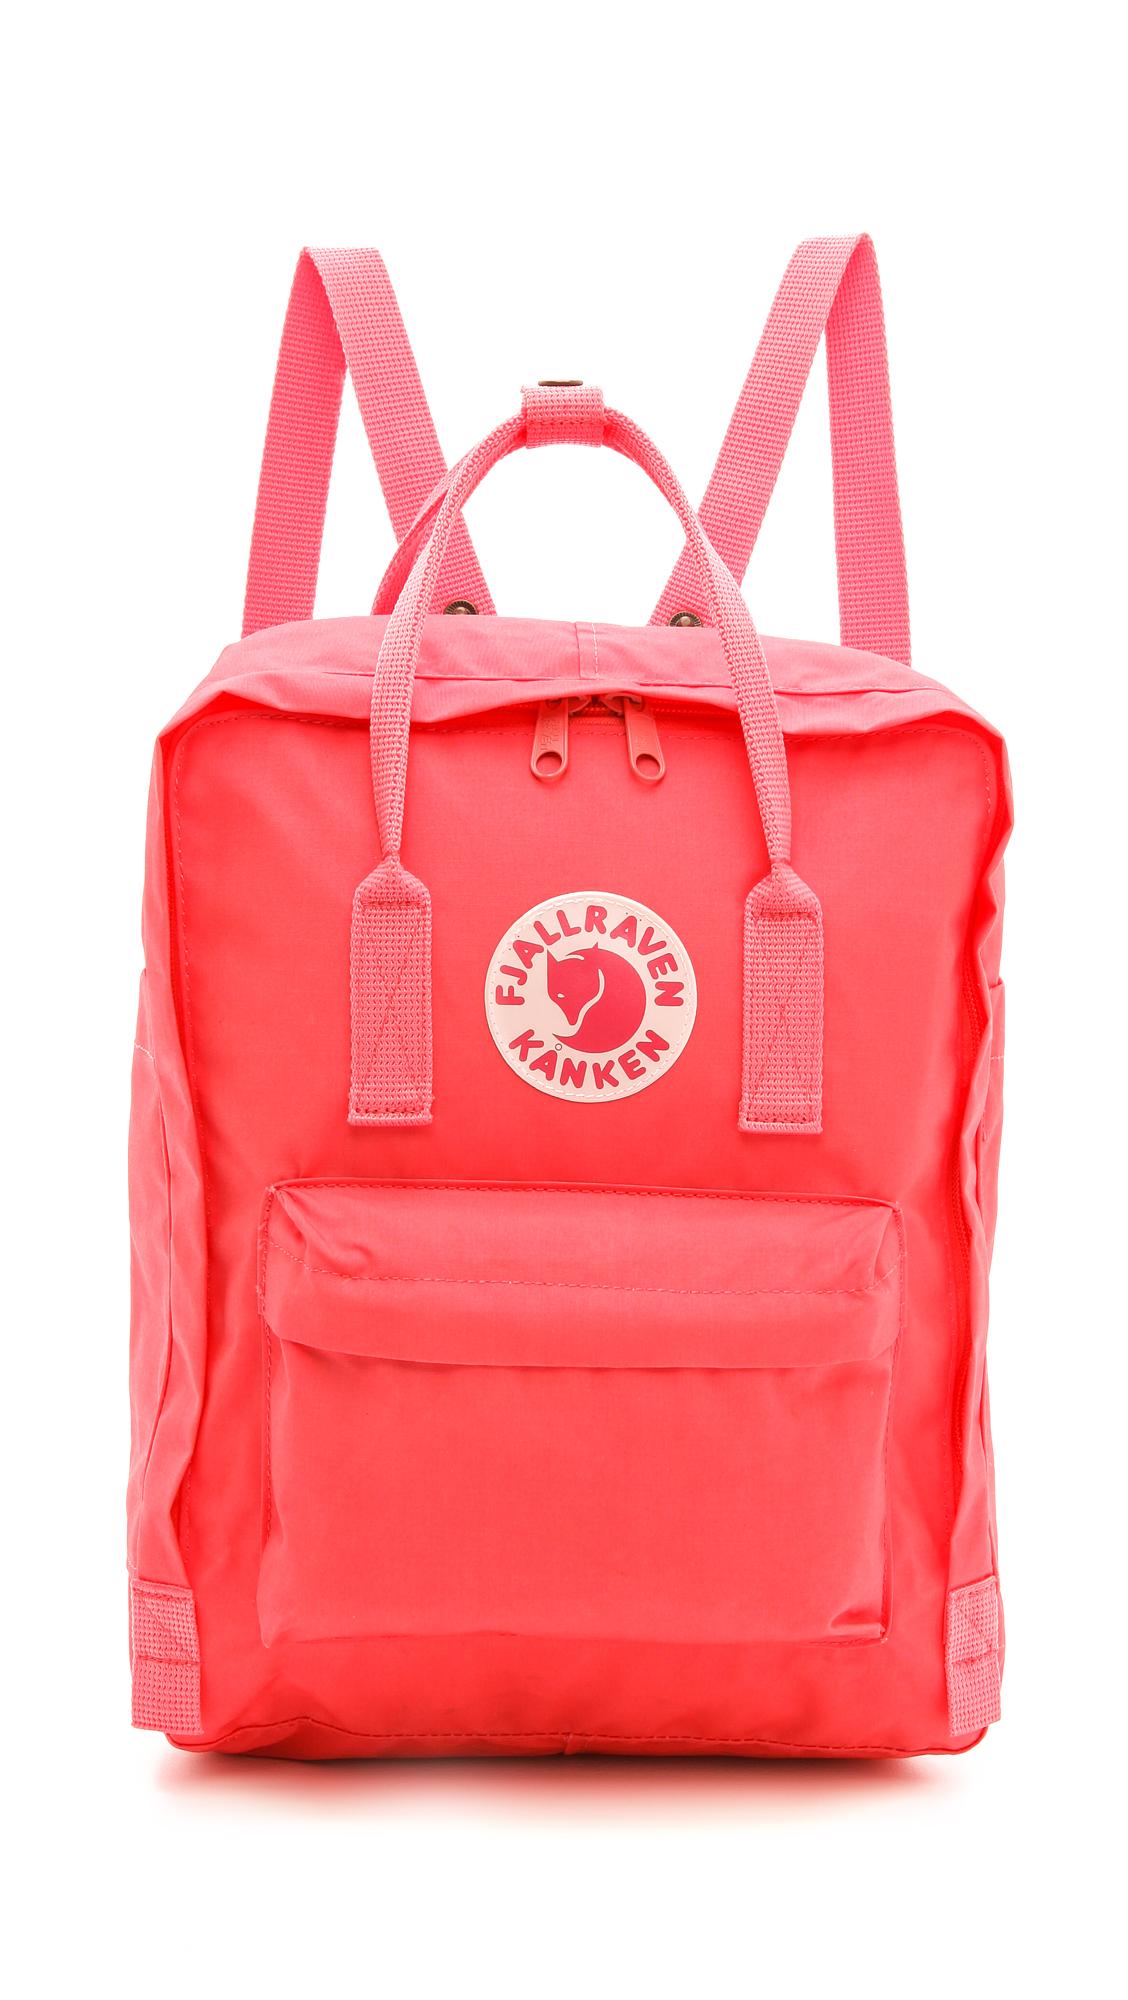 Fjallraven Kanken Backpack in Peach Pink (Pink) - Lyst